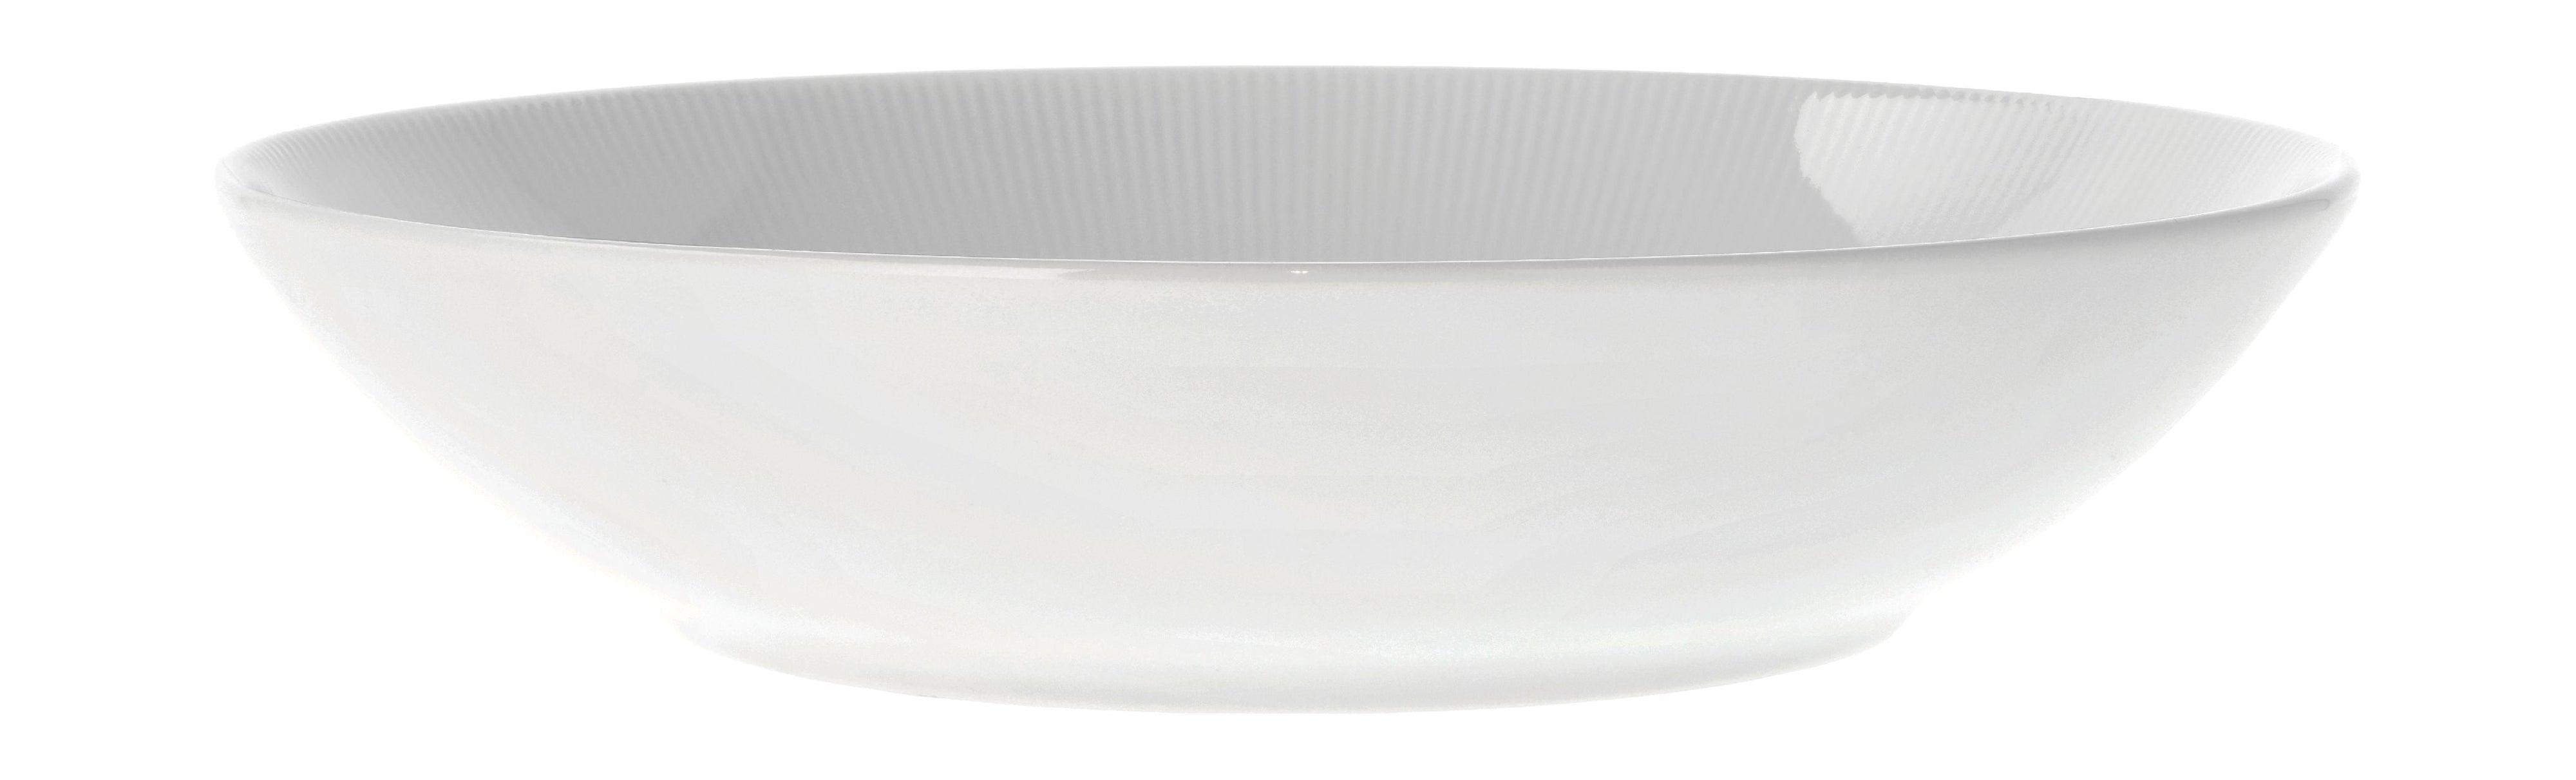 Pillivuyt Eventail Bowl Ø23 cm 0,8 liter, vit